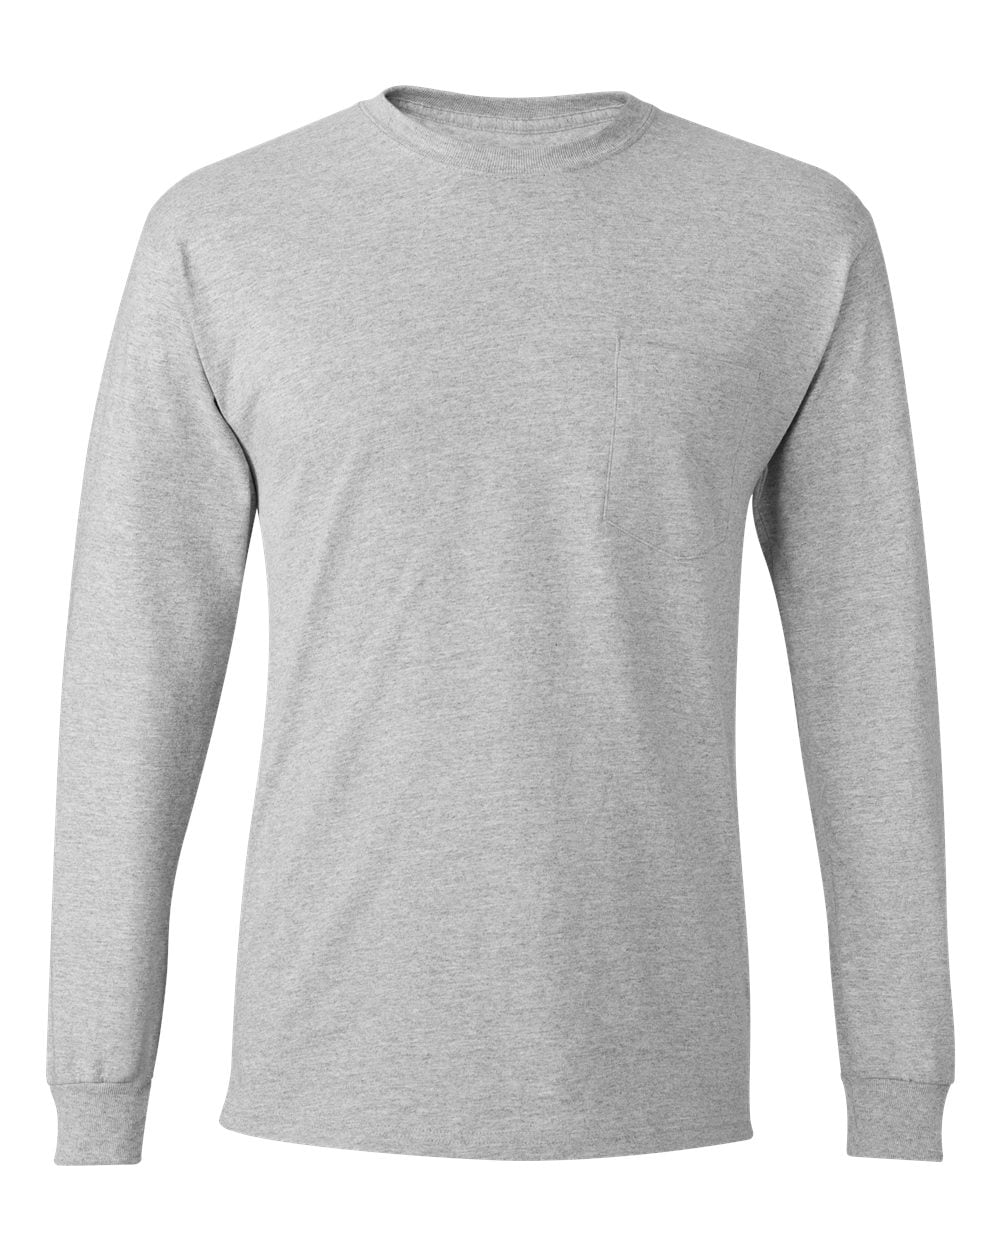 Hanes - Tagless® Long Sleeve Pocket T-Shirt - Walmart.com